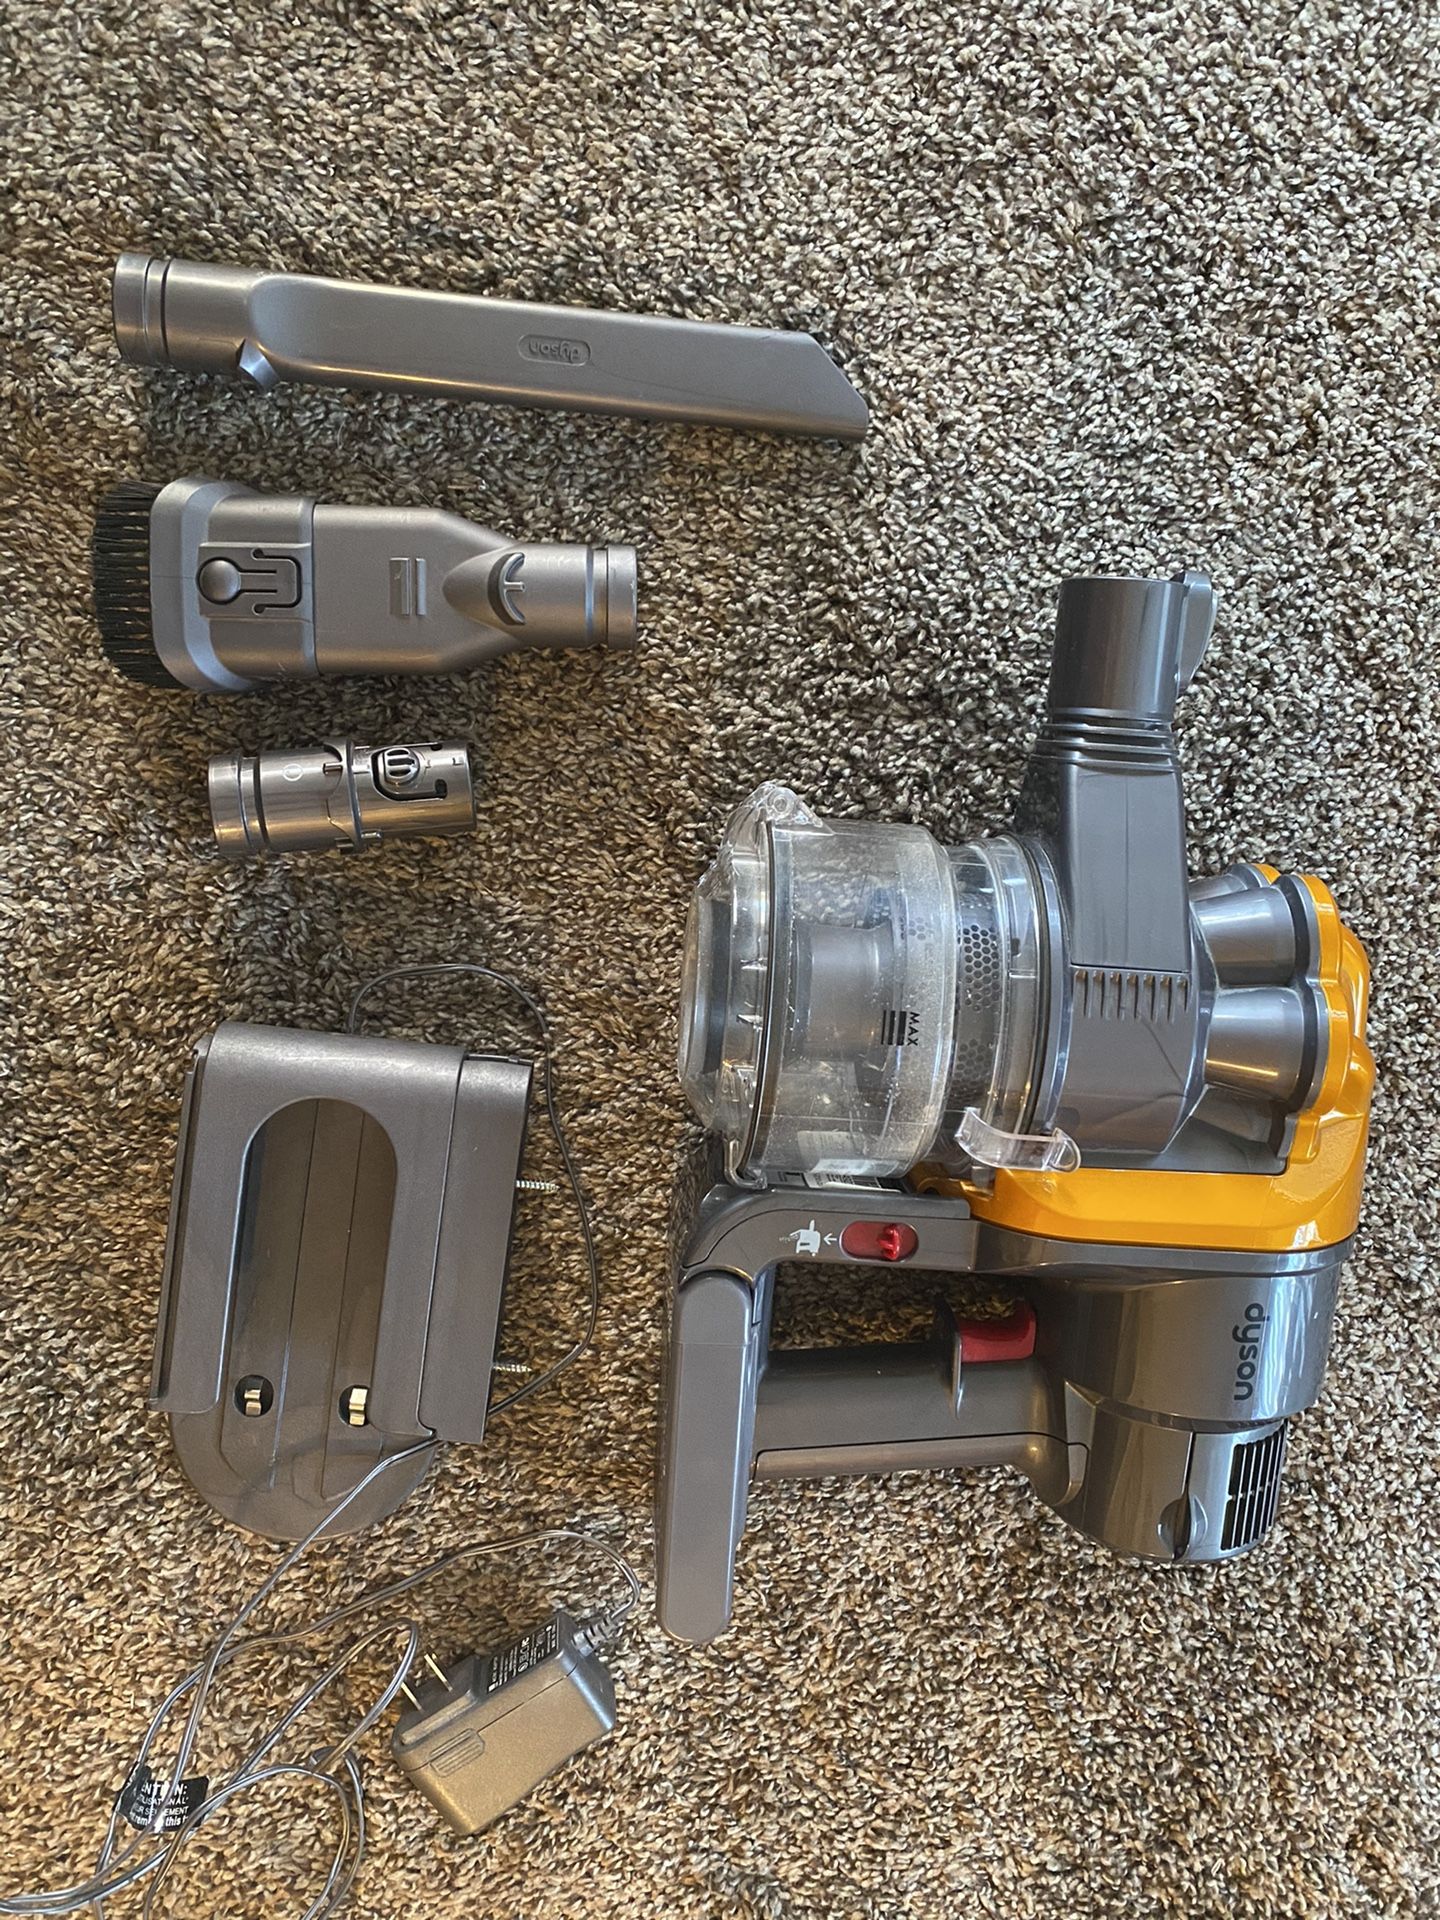 Dyson cordless handheld vacuum